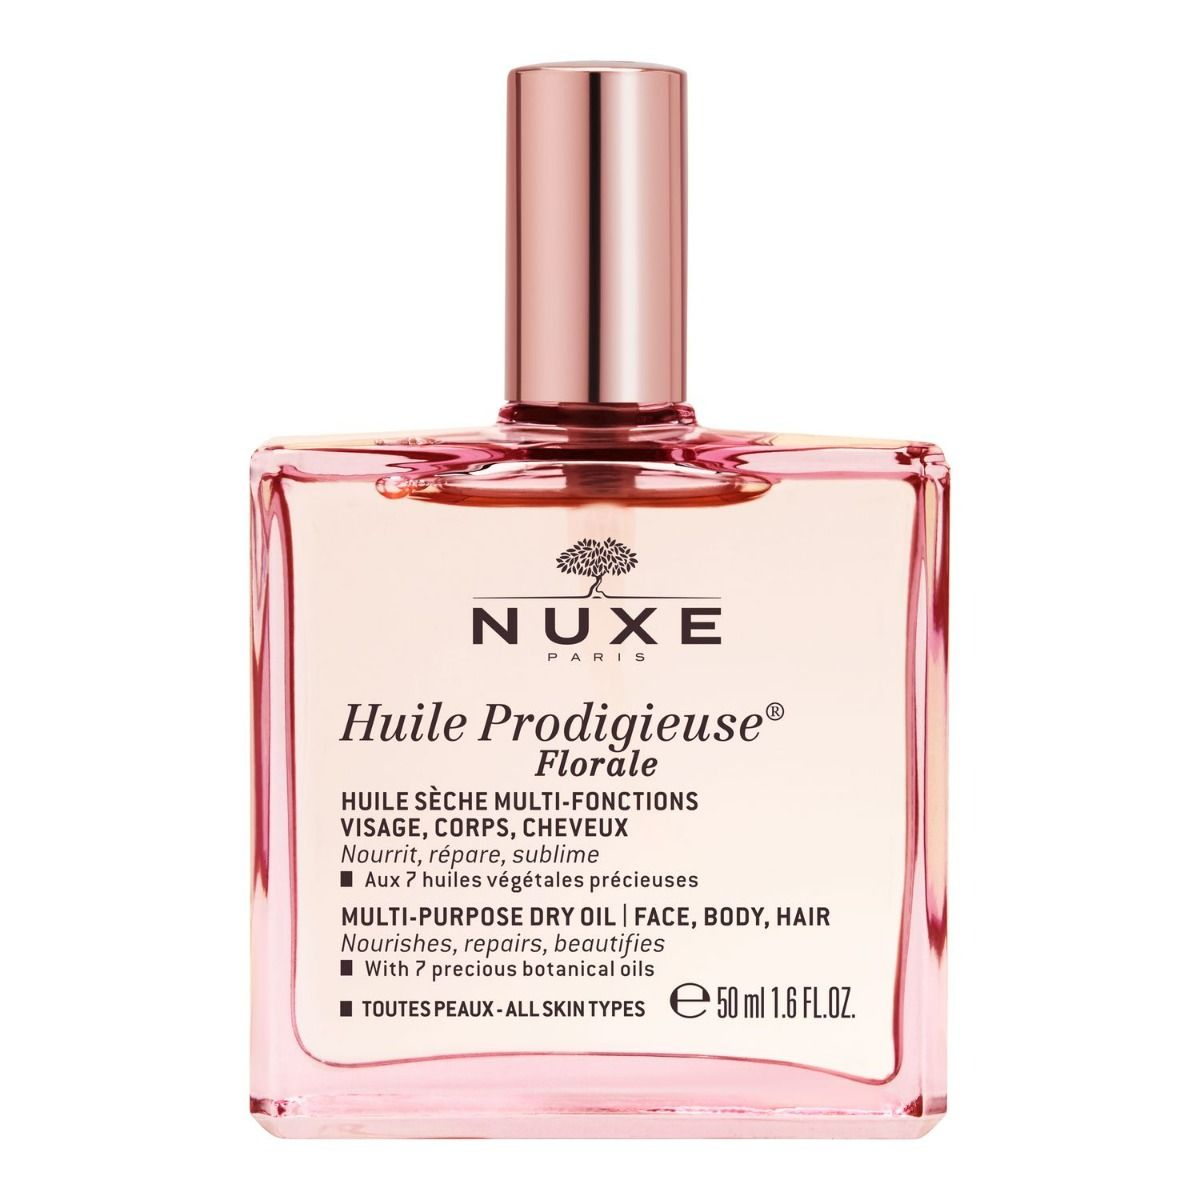 Nuxe Huile Prodigieuse Florale масло для лица, тела и волос, 50 ml nuxe цветочное сухое масло huile prodigieuse florale 50 мл nuxe prodigieuse